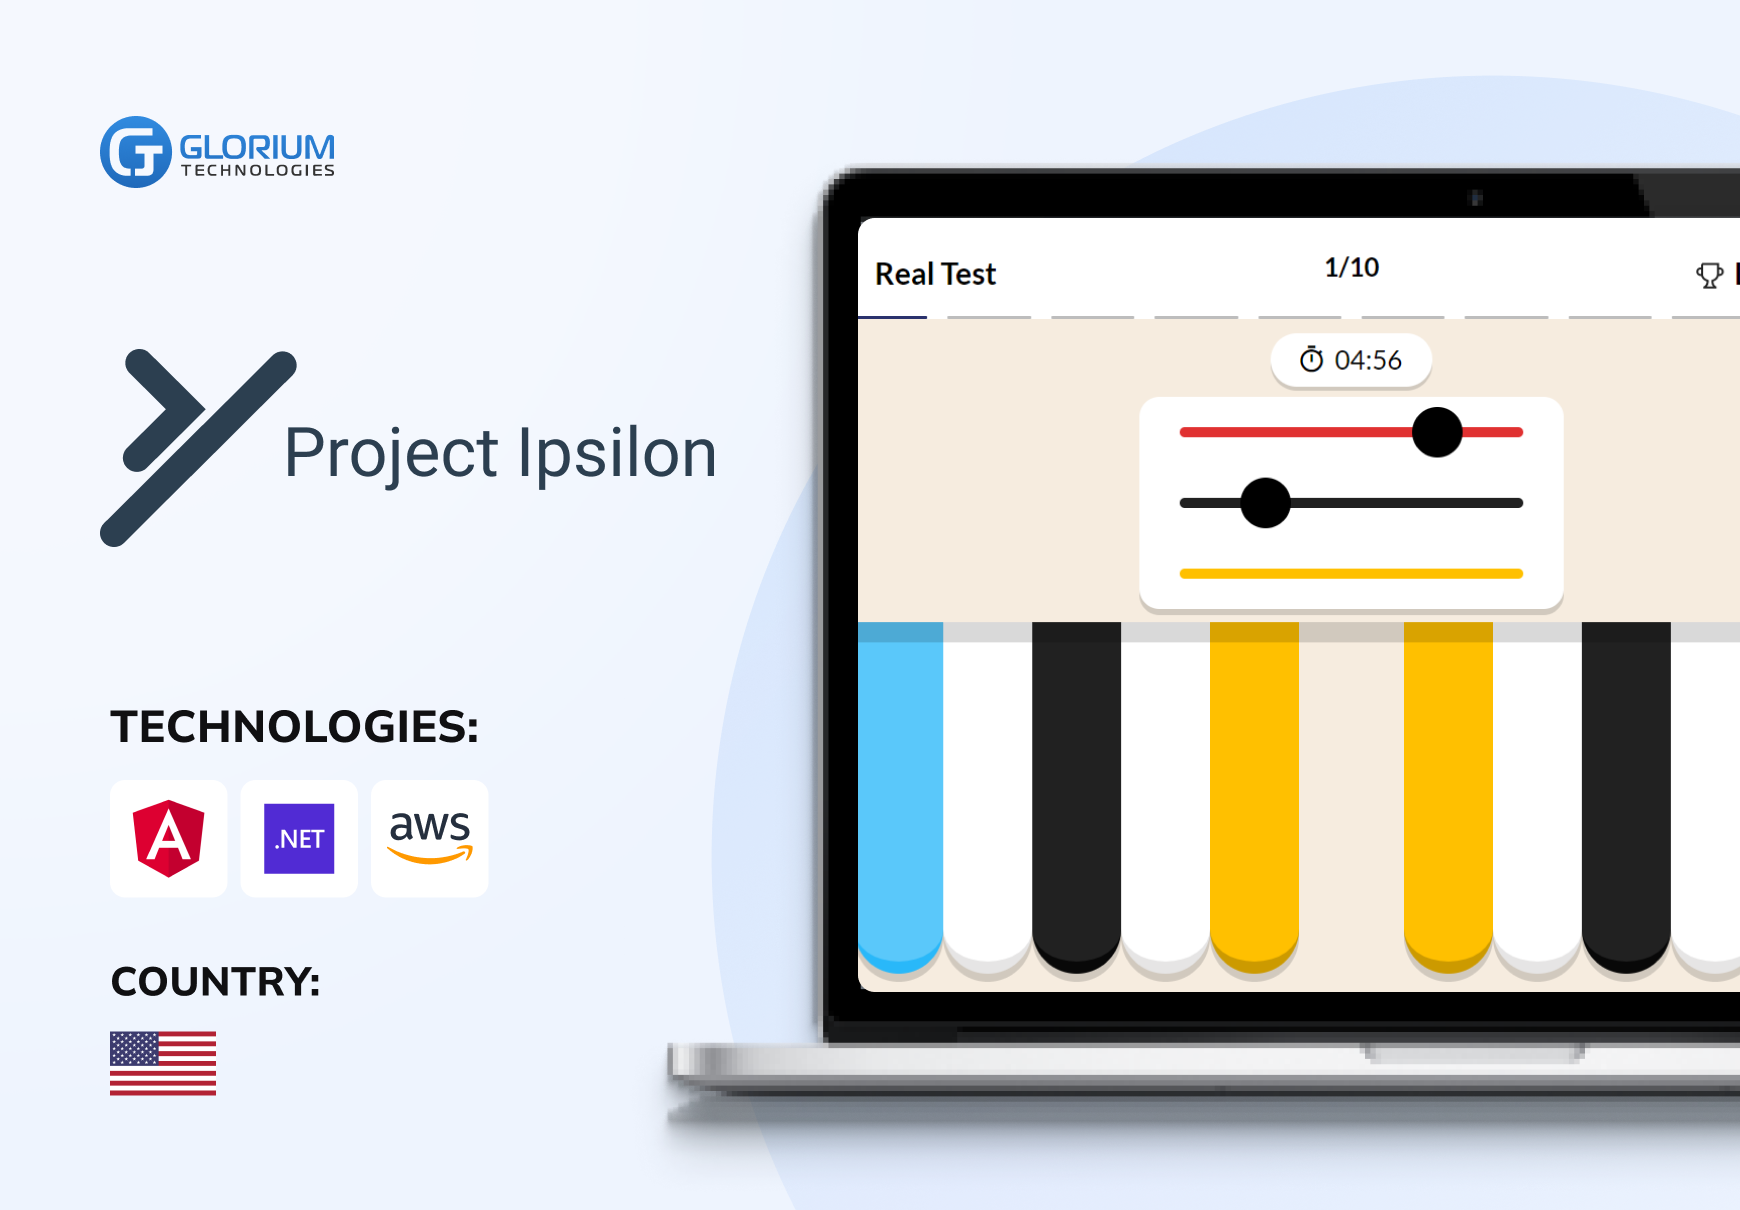 Project Ipsilon